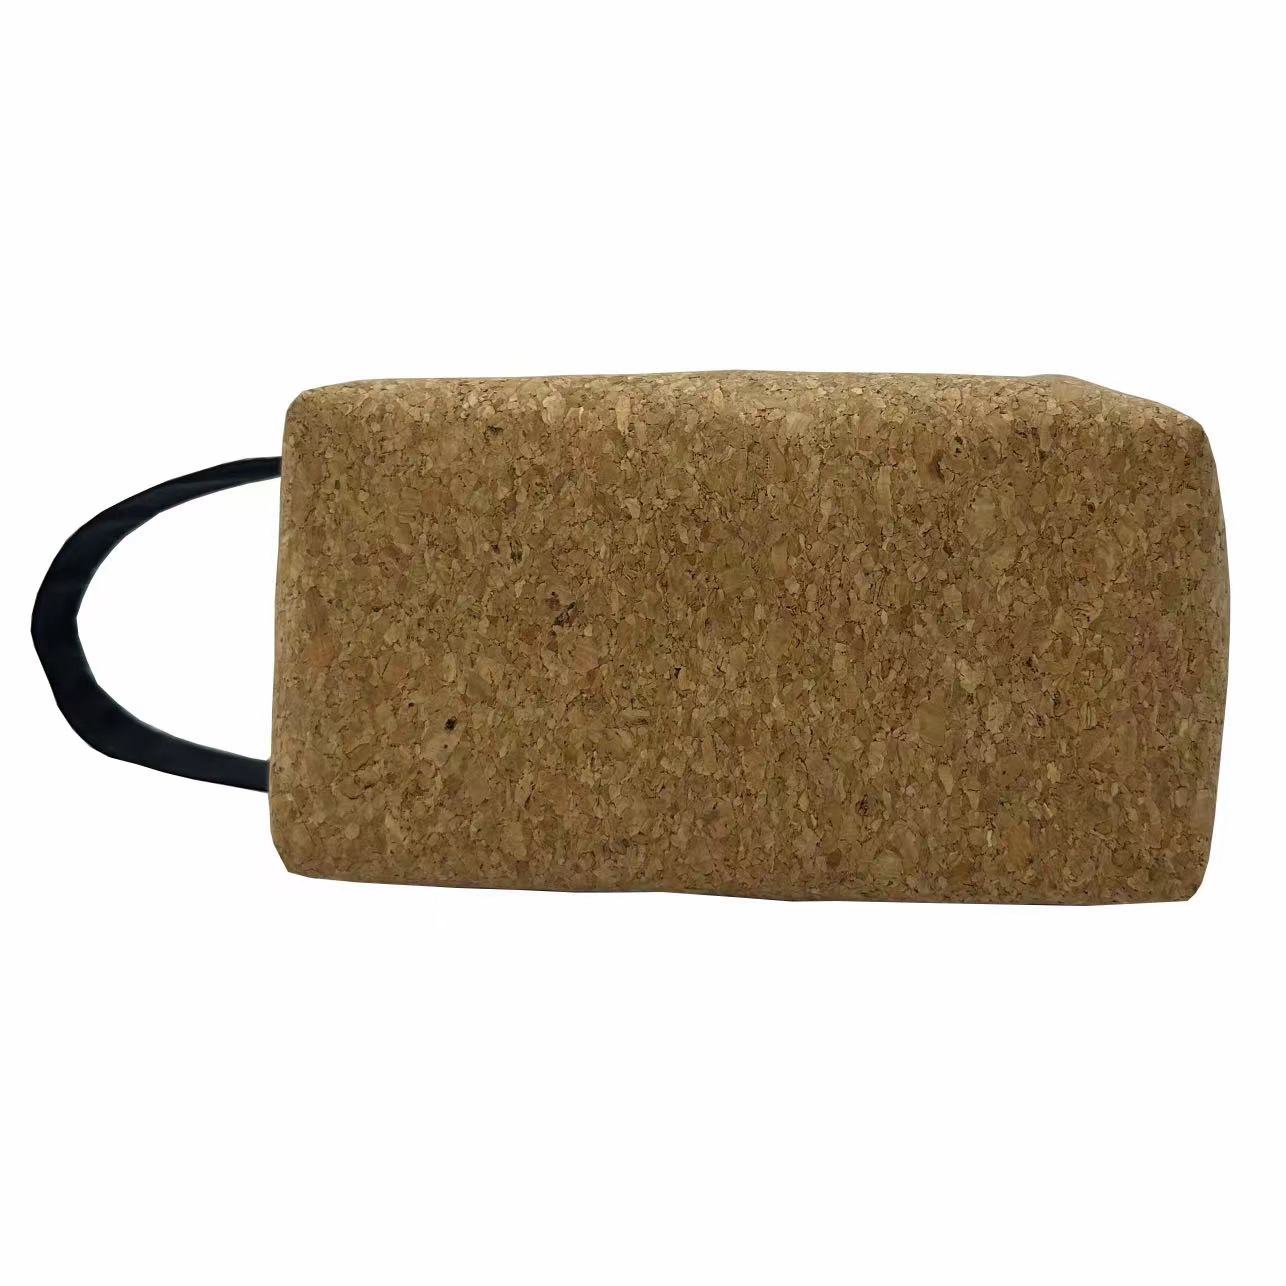 Portable Cosmetics Bag Travel Bag With Zipper